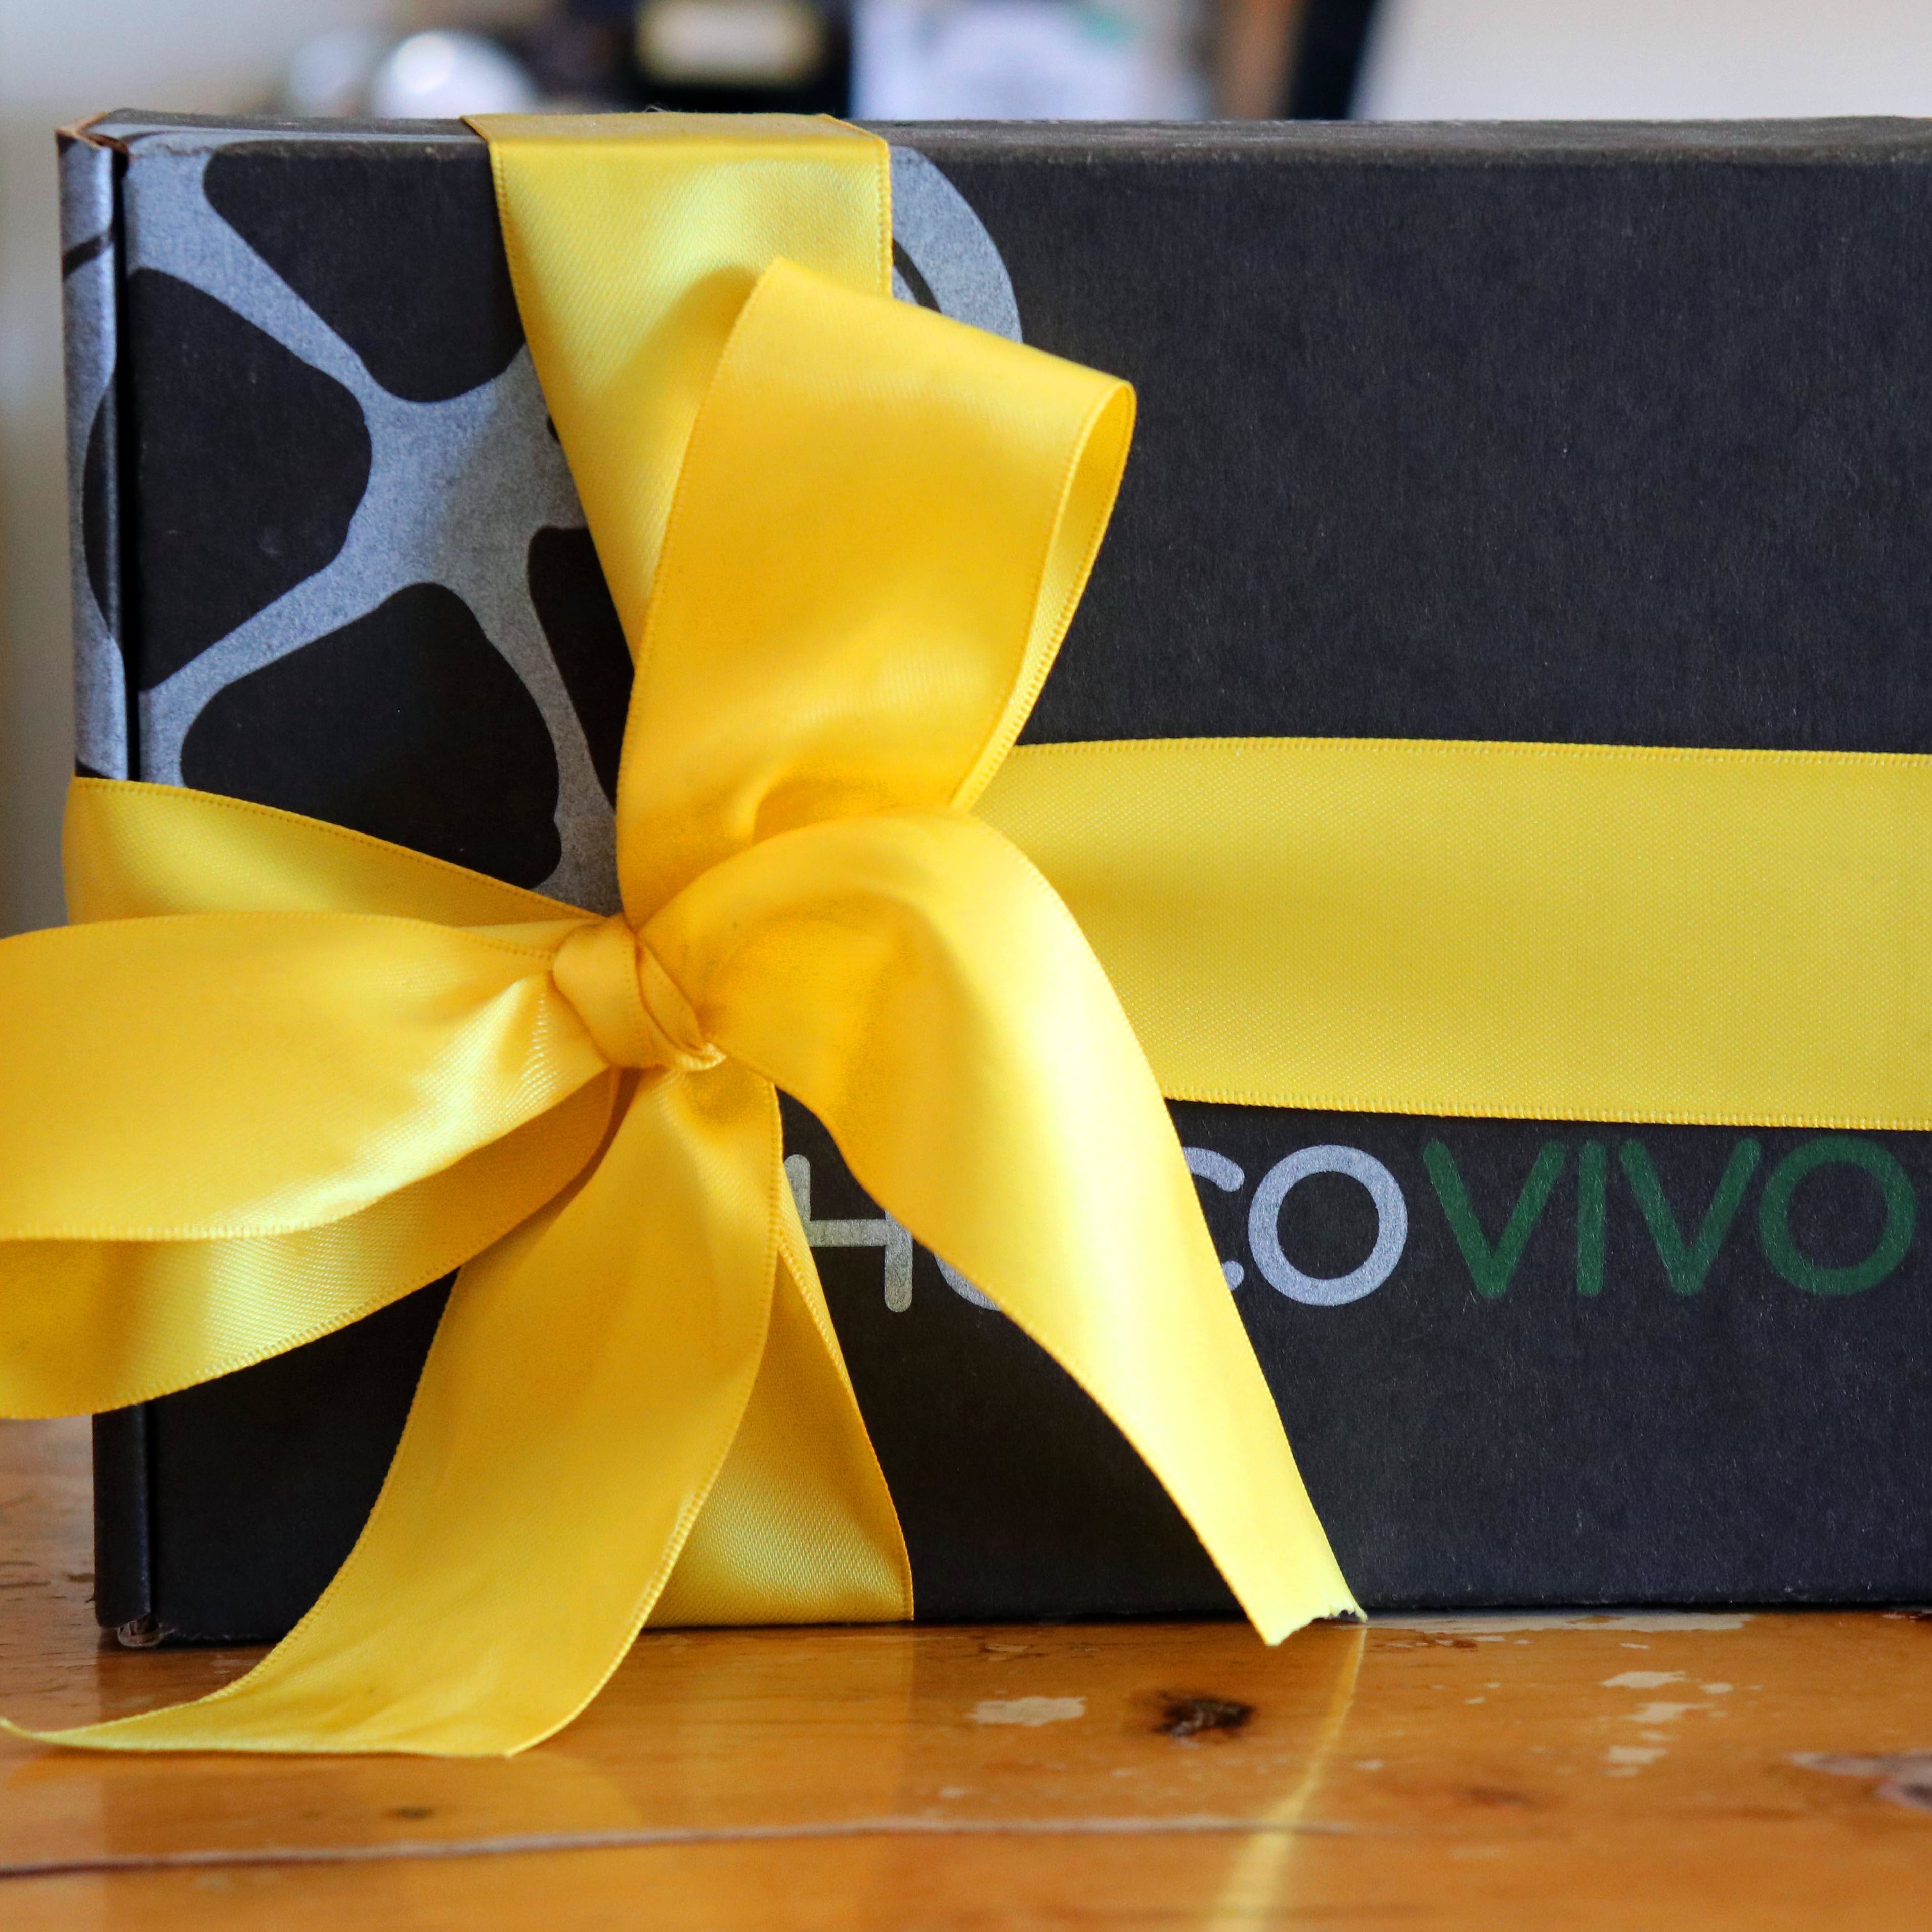 [Sweepstakes] Holiday Gift Set Giveaway - ChocoVivo